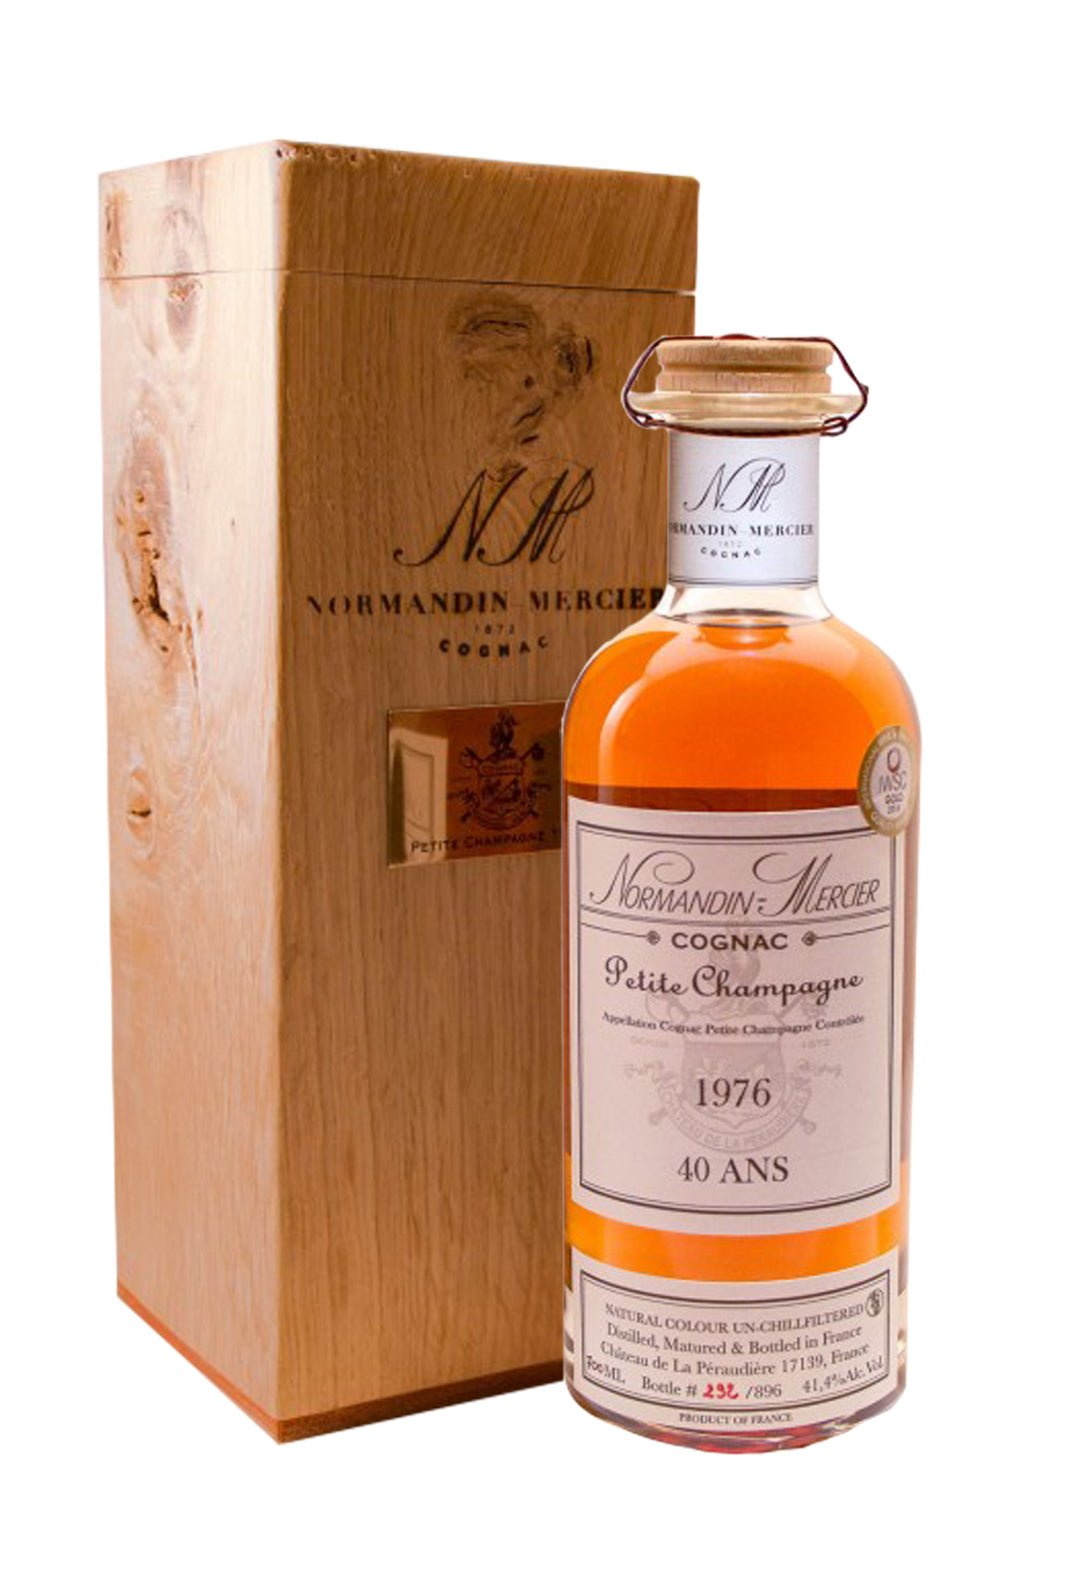 Normandin-Mercier Cognac Petite Champagne 1976 41.4% 500ml | Brandy | Shop online at Spirits of France